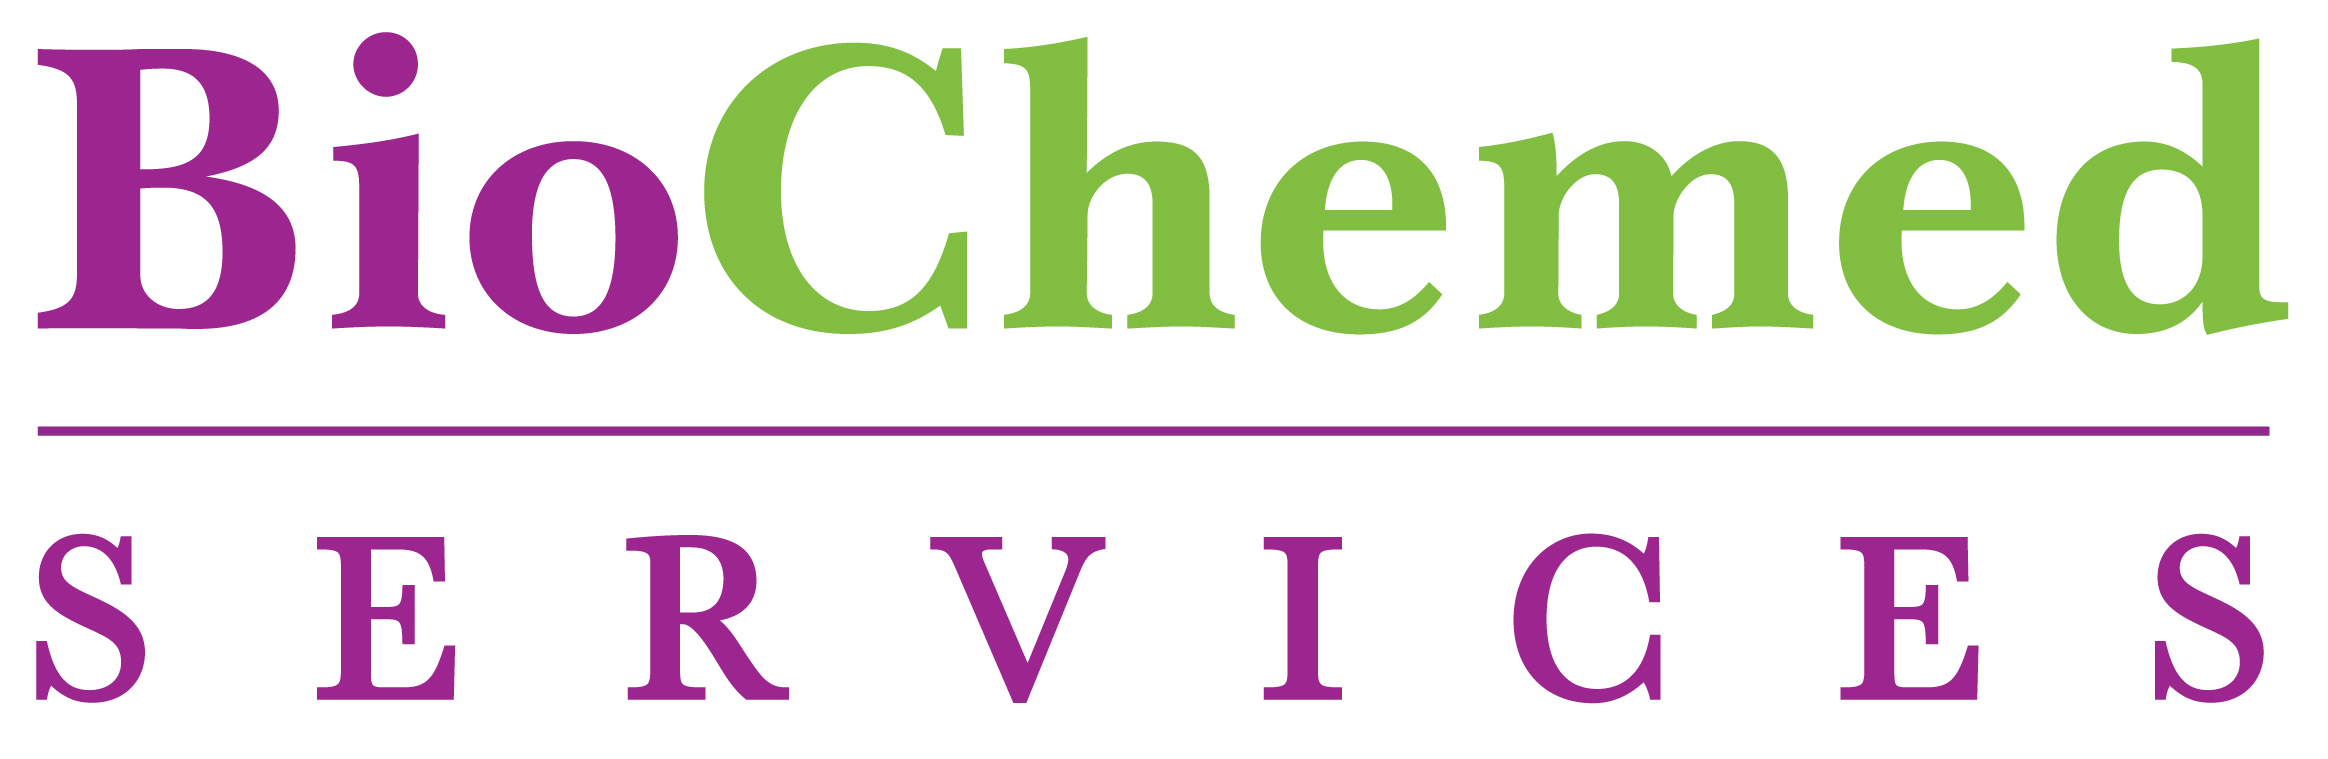 BioChemed Services